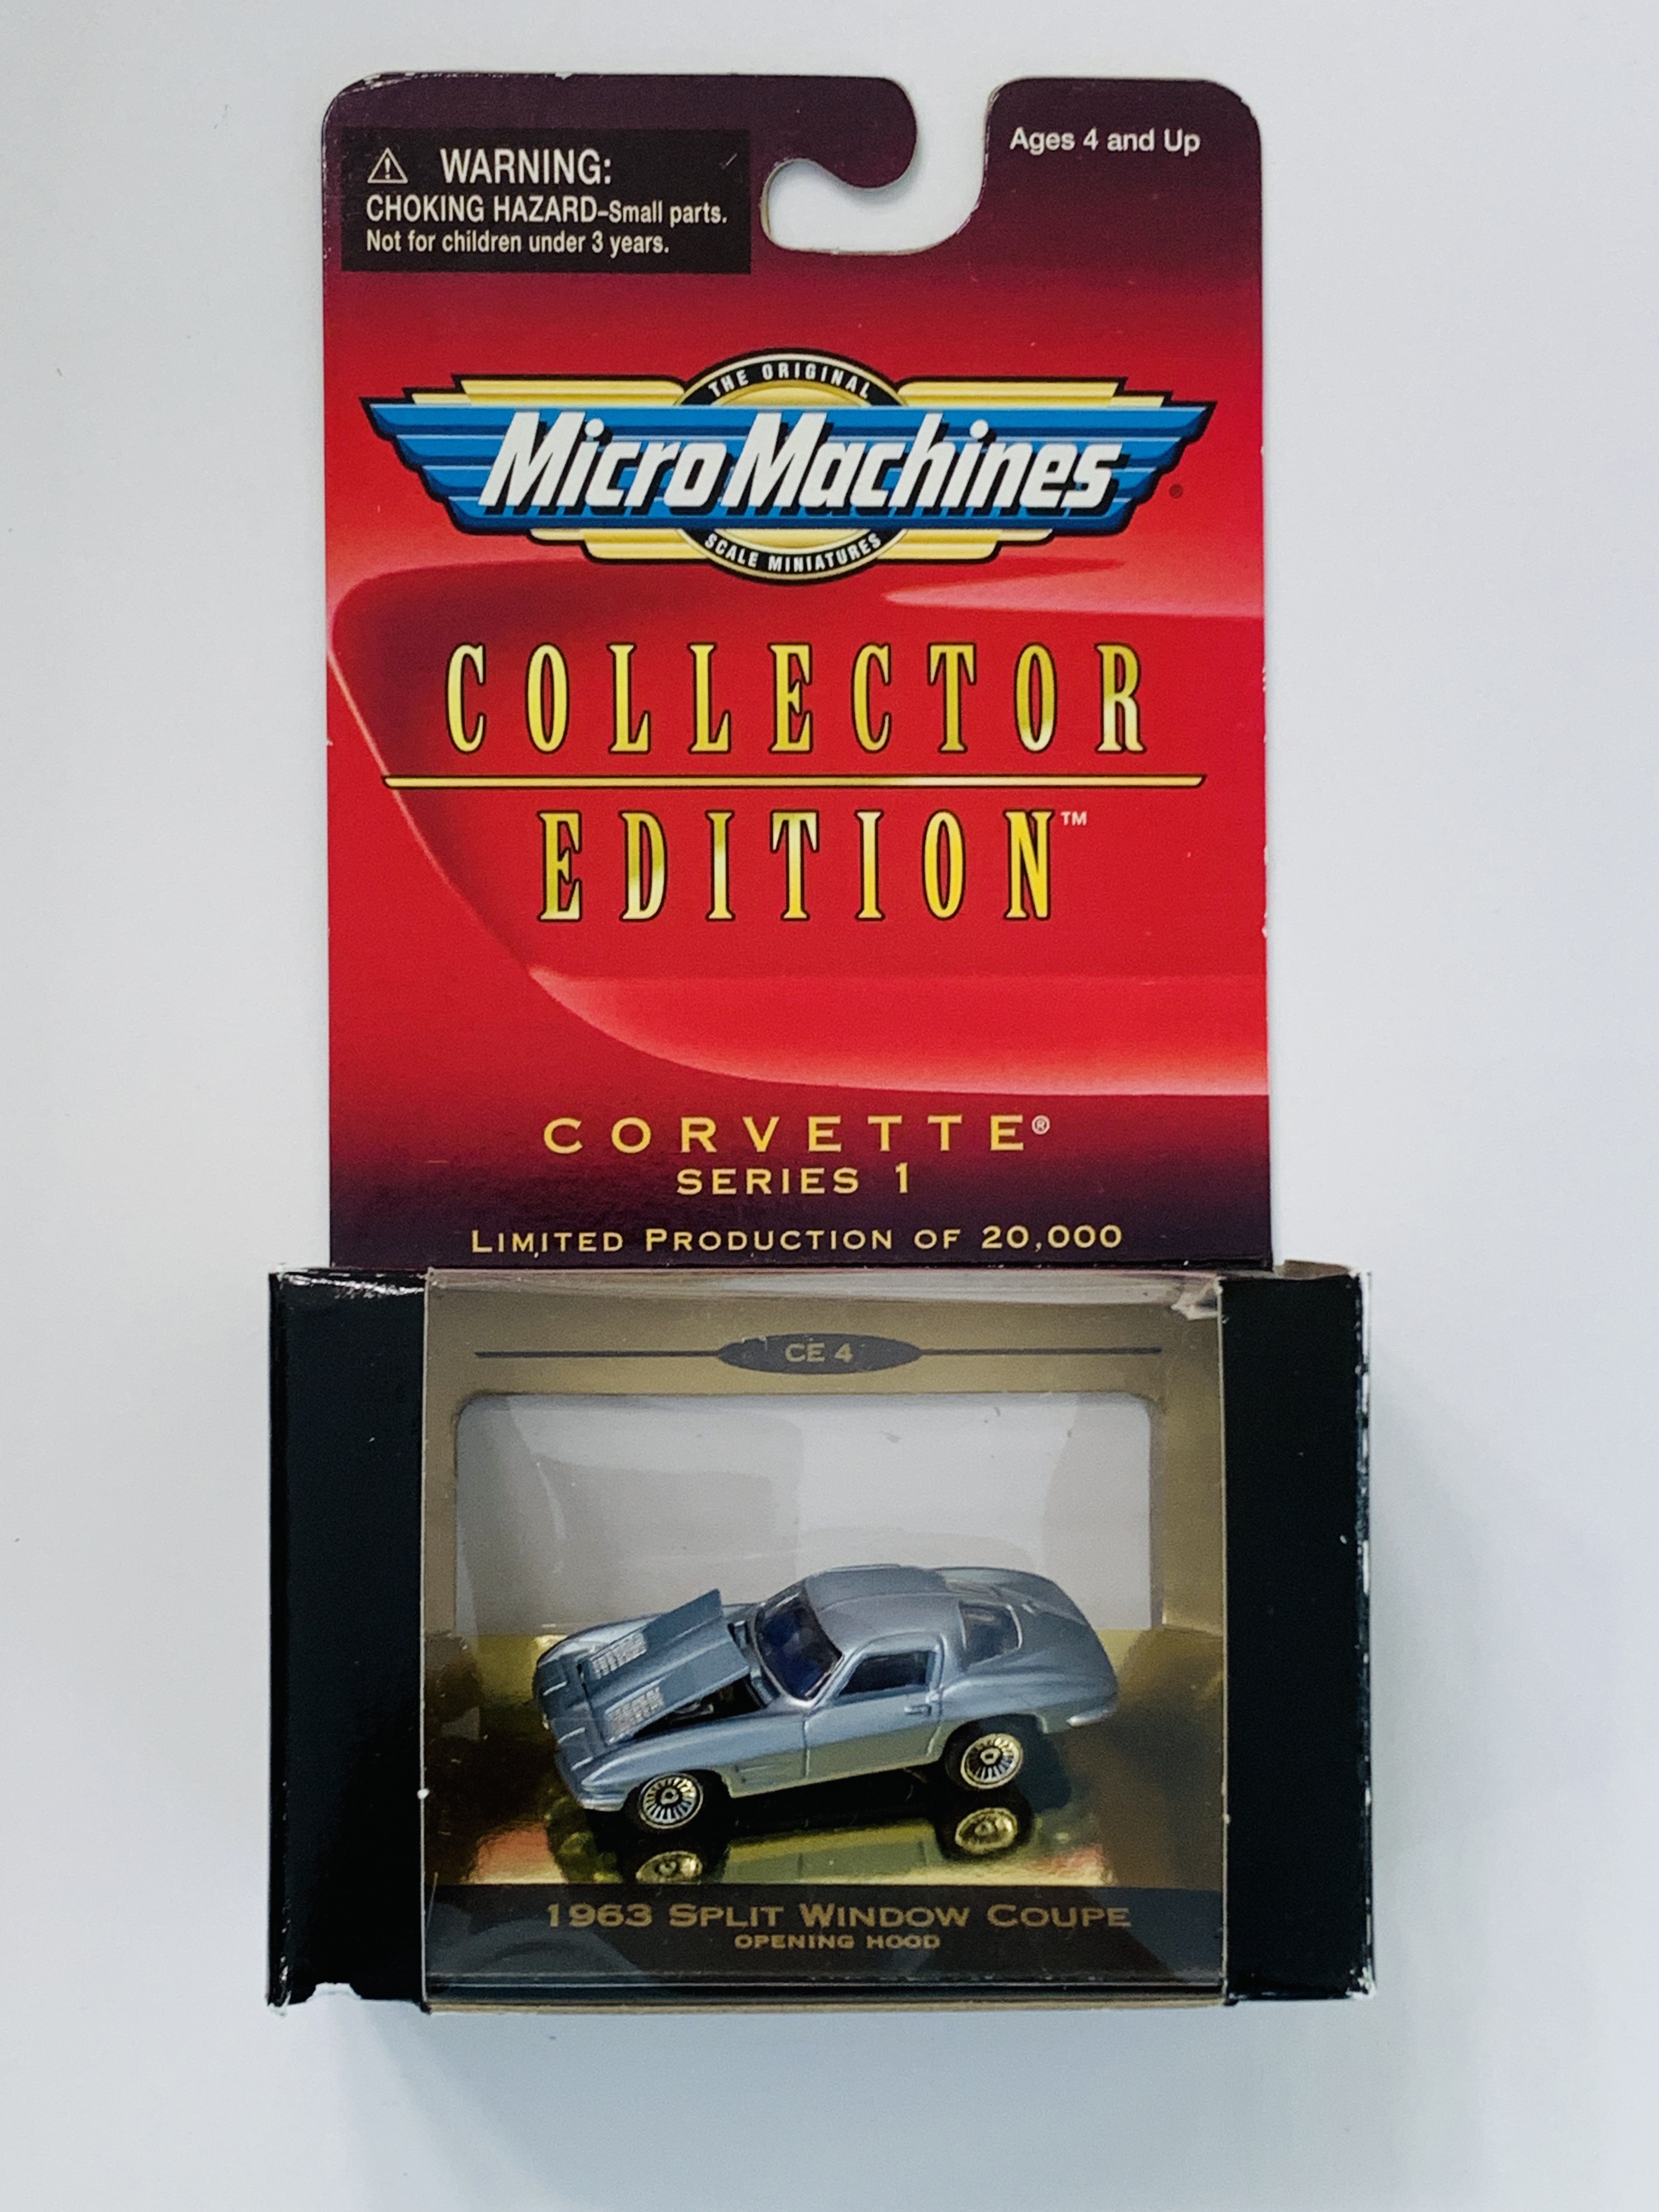 Micro Machines Collector Edition Corvette Series 1 1963 Split Window Coupe